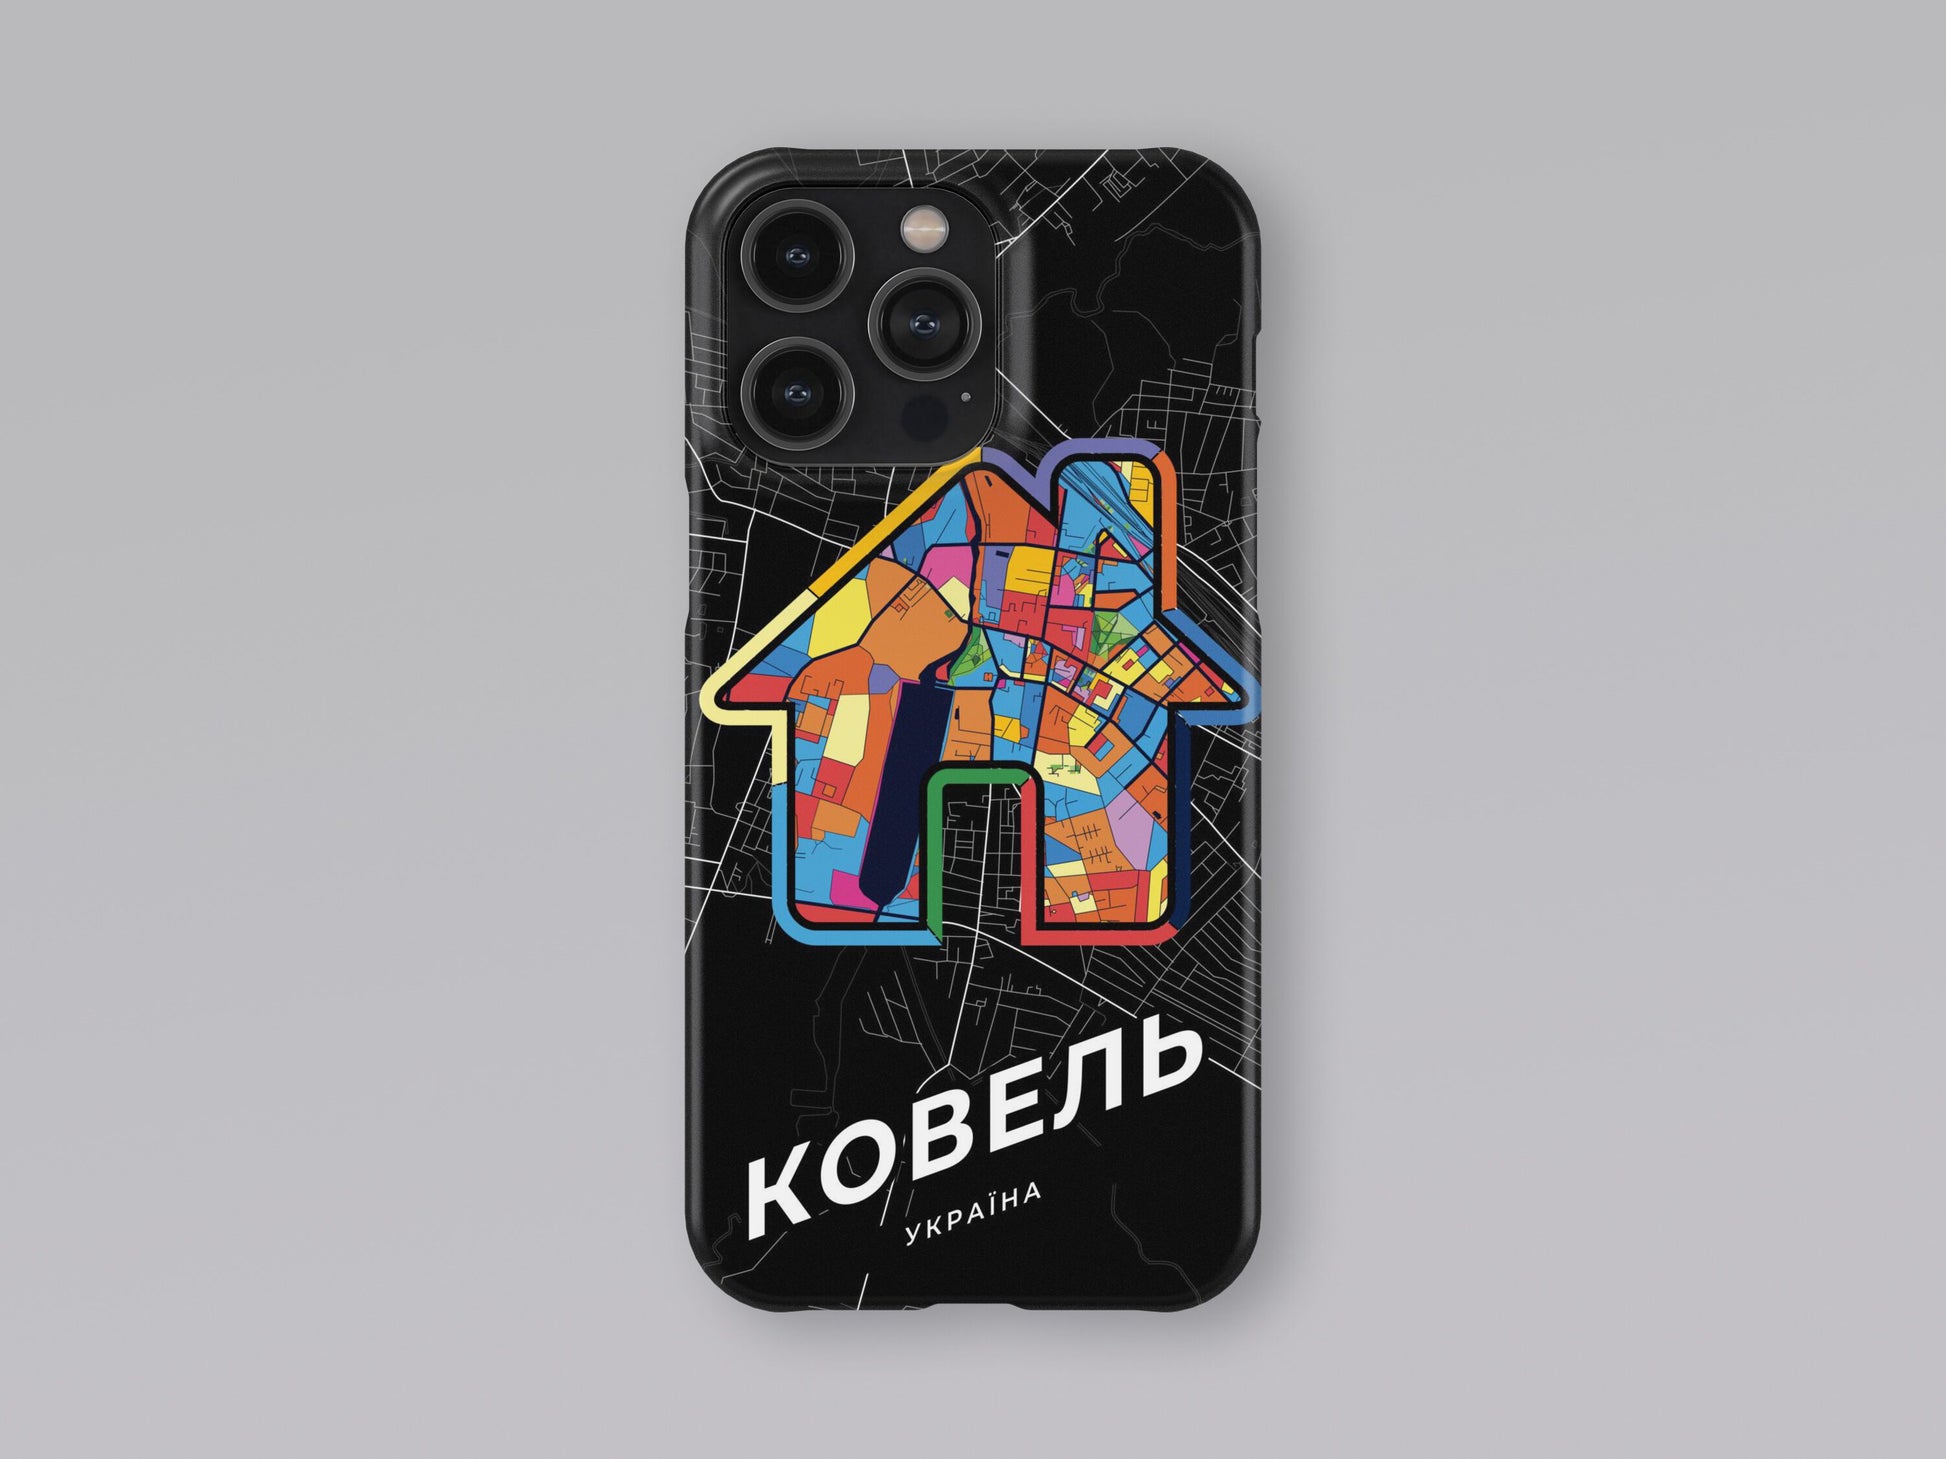 Kovel Ukraine slim phone case with colorful icon. Birthday, wedding or housewarming gift. Couple match cases. 3